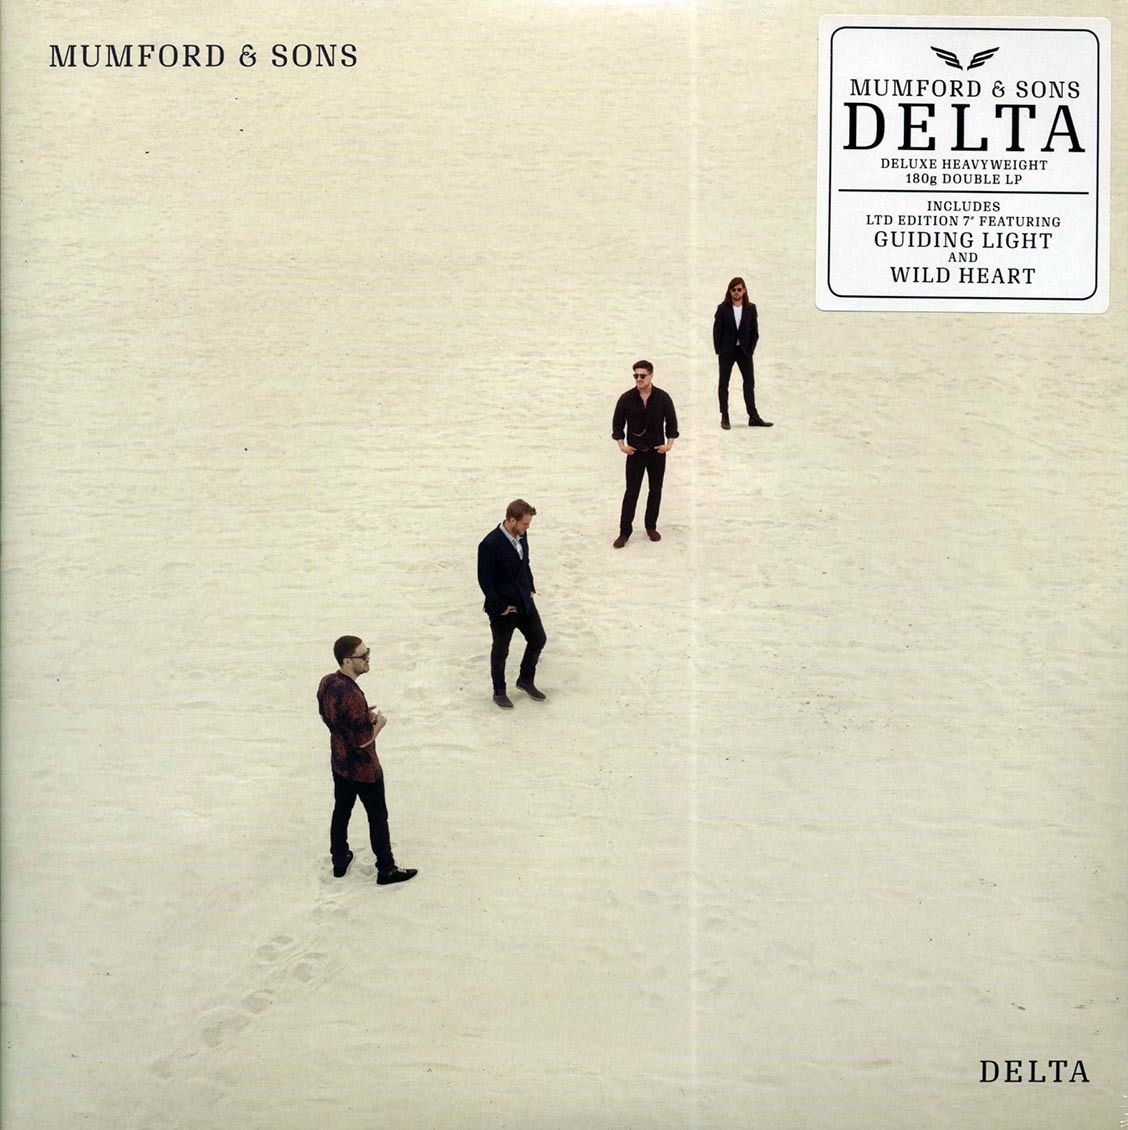 Mumford & Sons - Delta (ltd. ed.) (2xLP) (180g) (deluxe edition) (incl. 7)